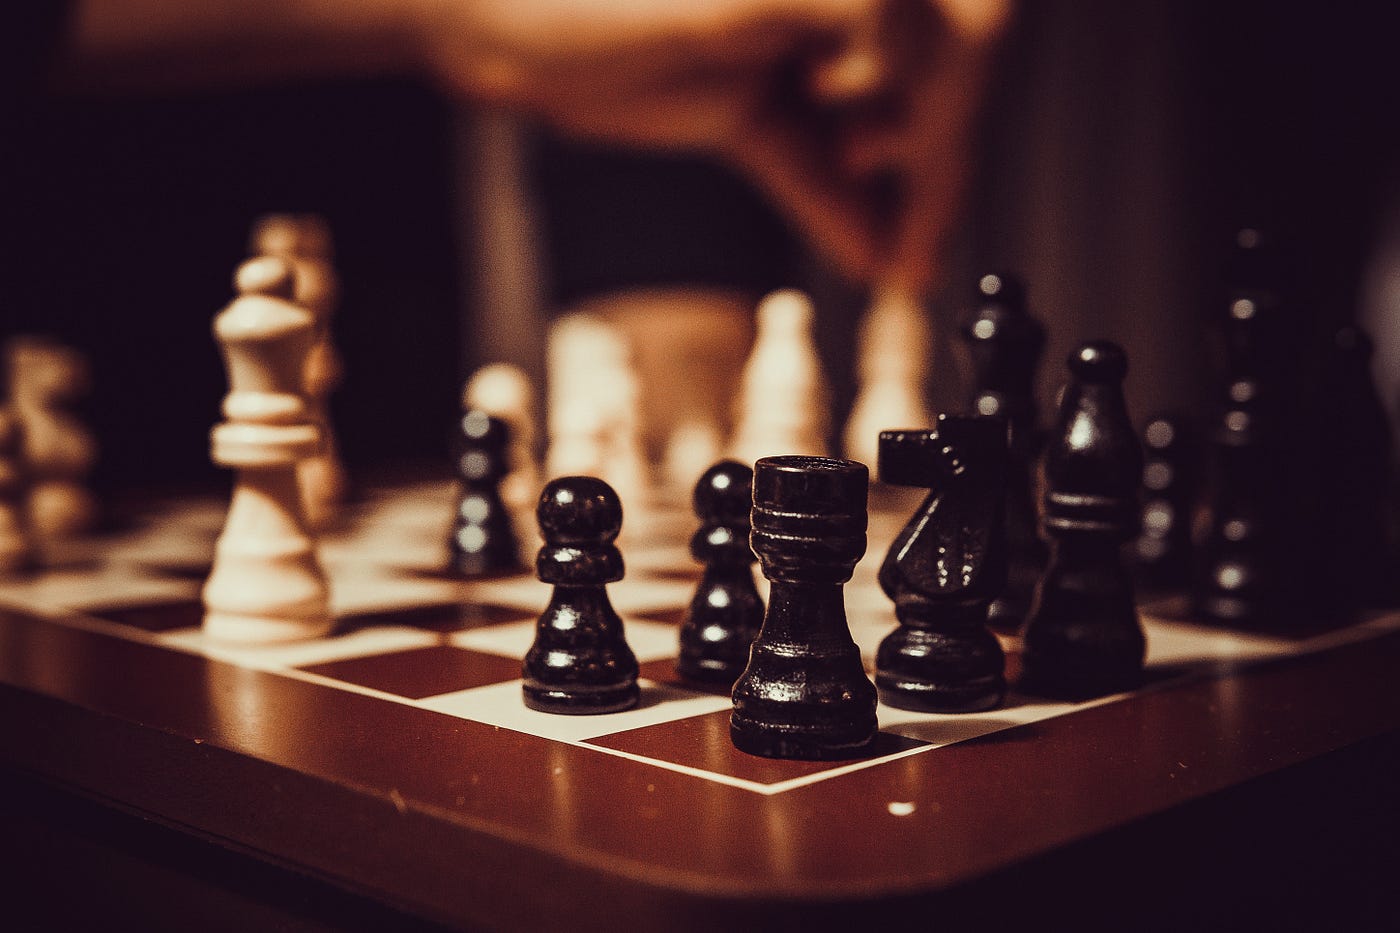 This AI chess board runs millions of winning strategies before